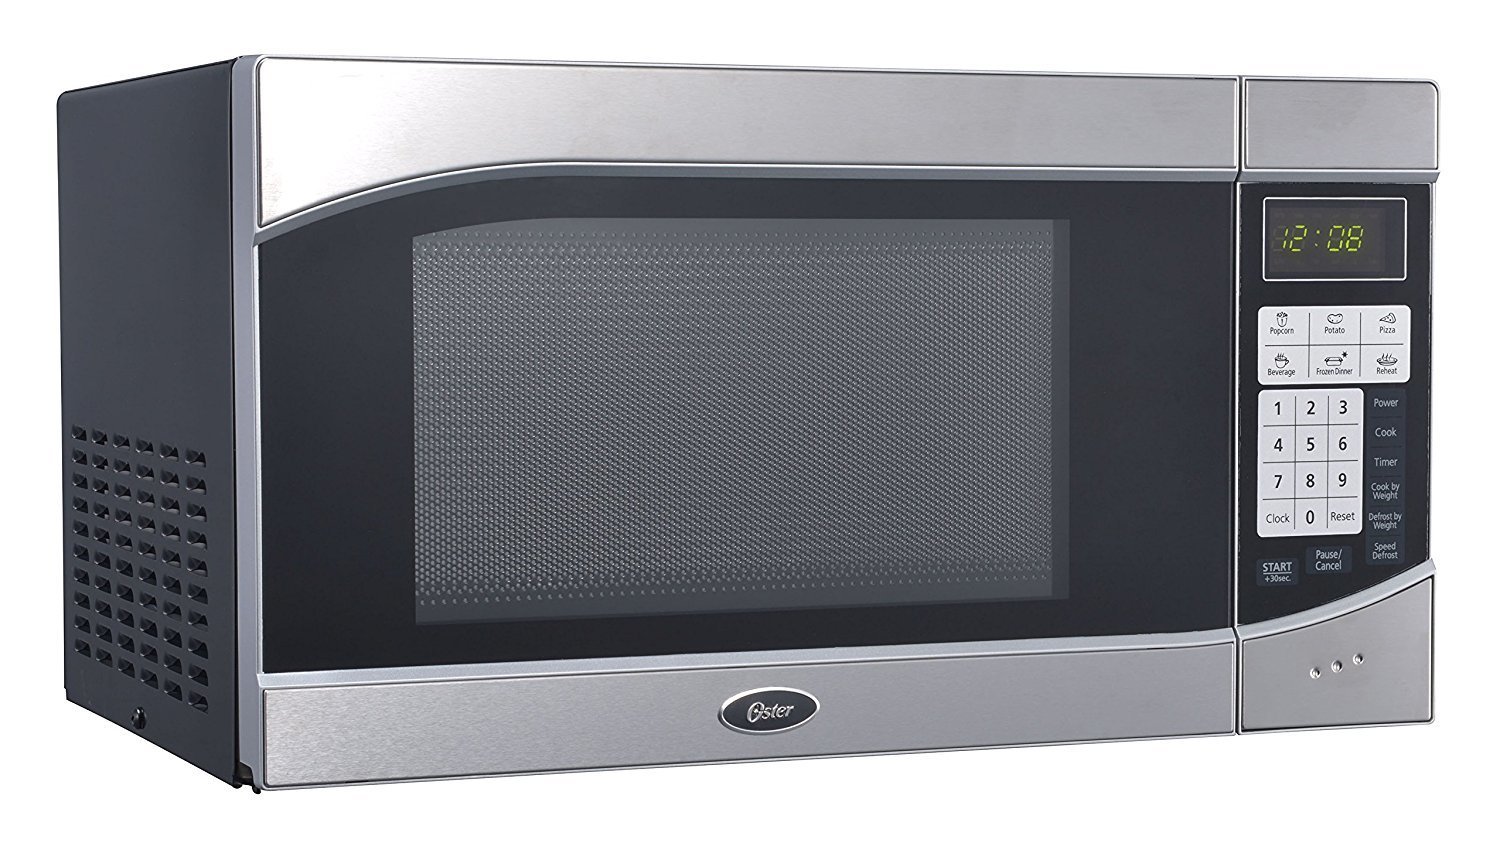 Oster OGH6901 0.9 Cubic Feet 900-Watt Countertop Digital Microwave Oven